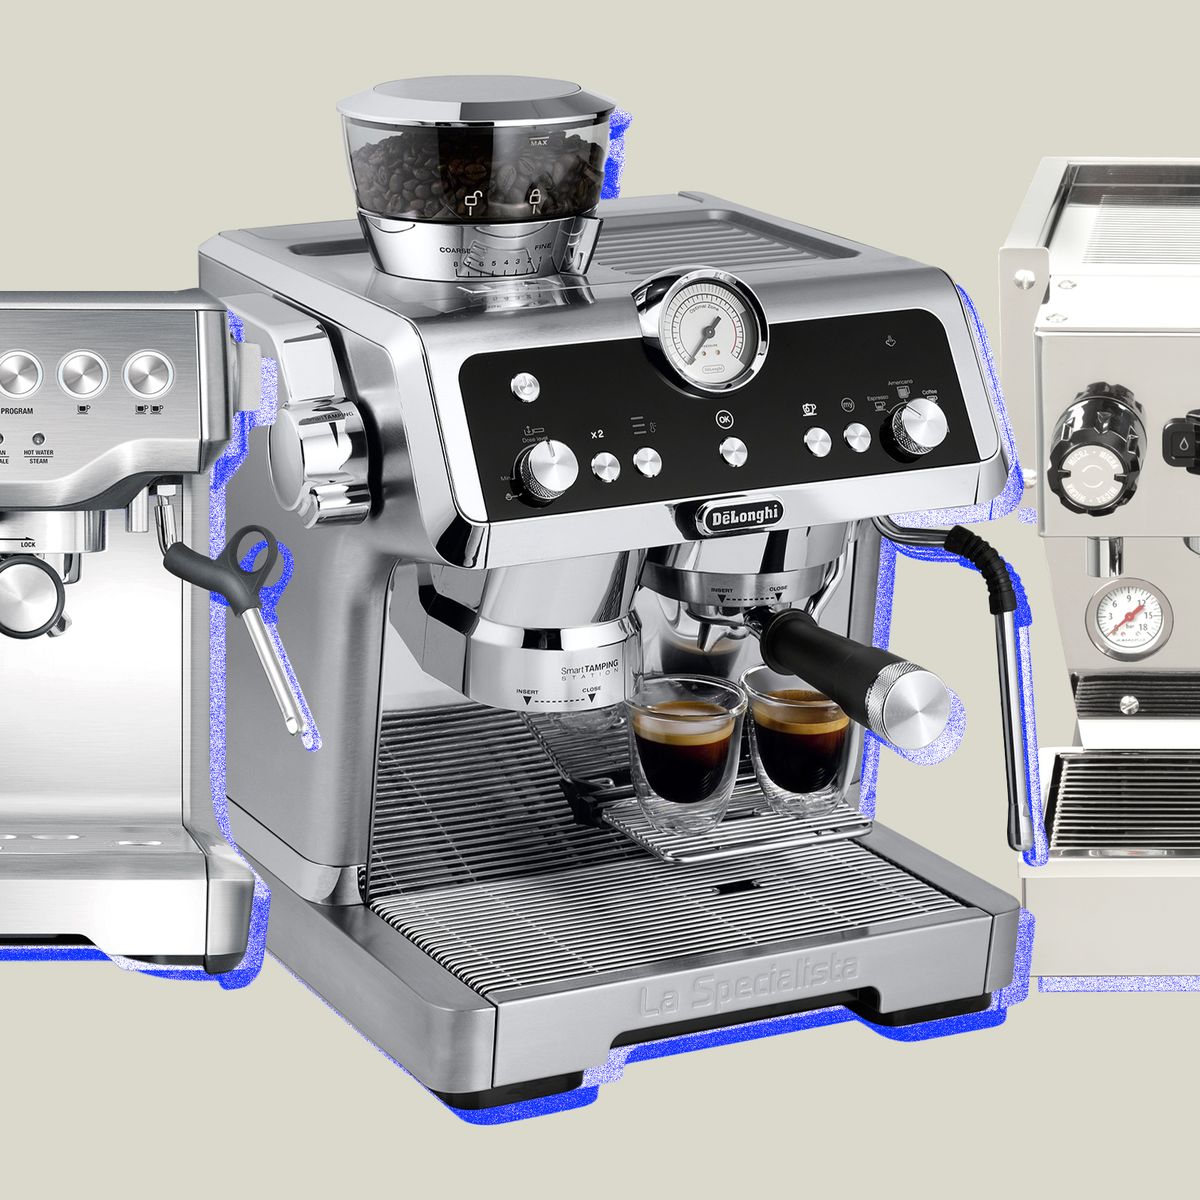 Is it worth buying a home espresso coffee machine?